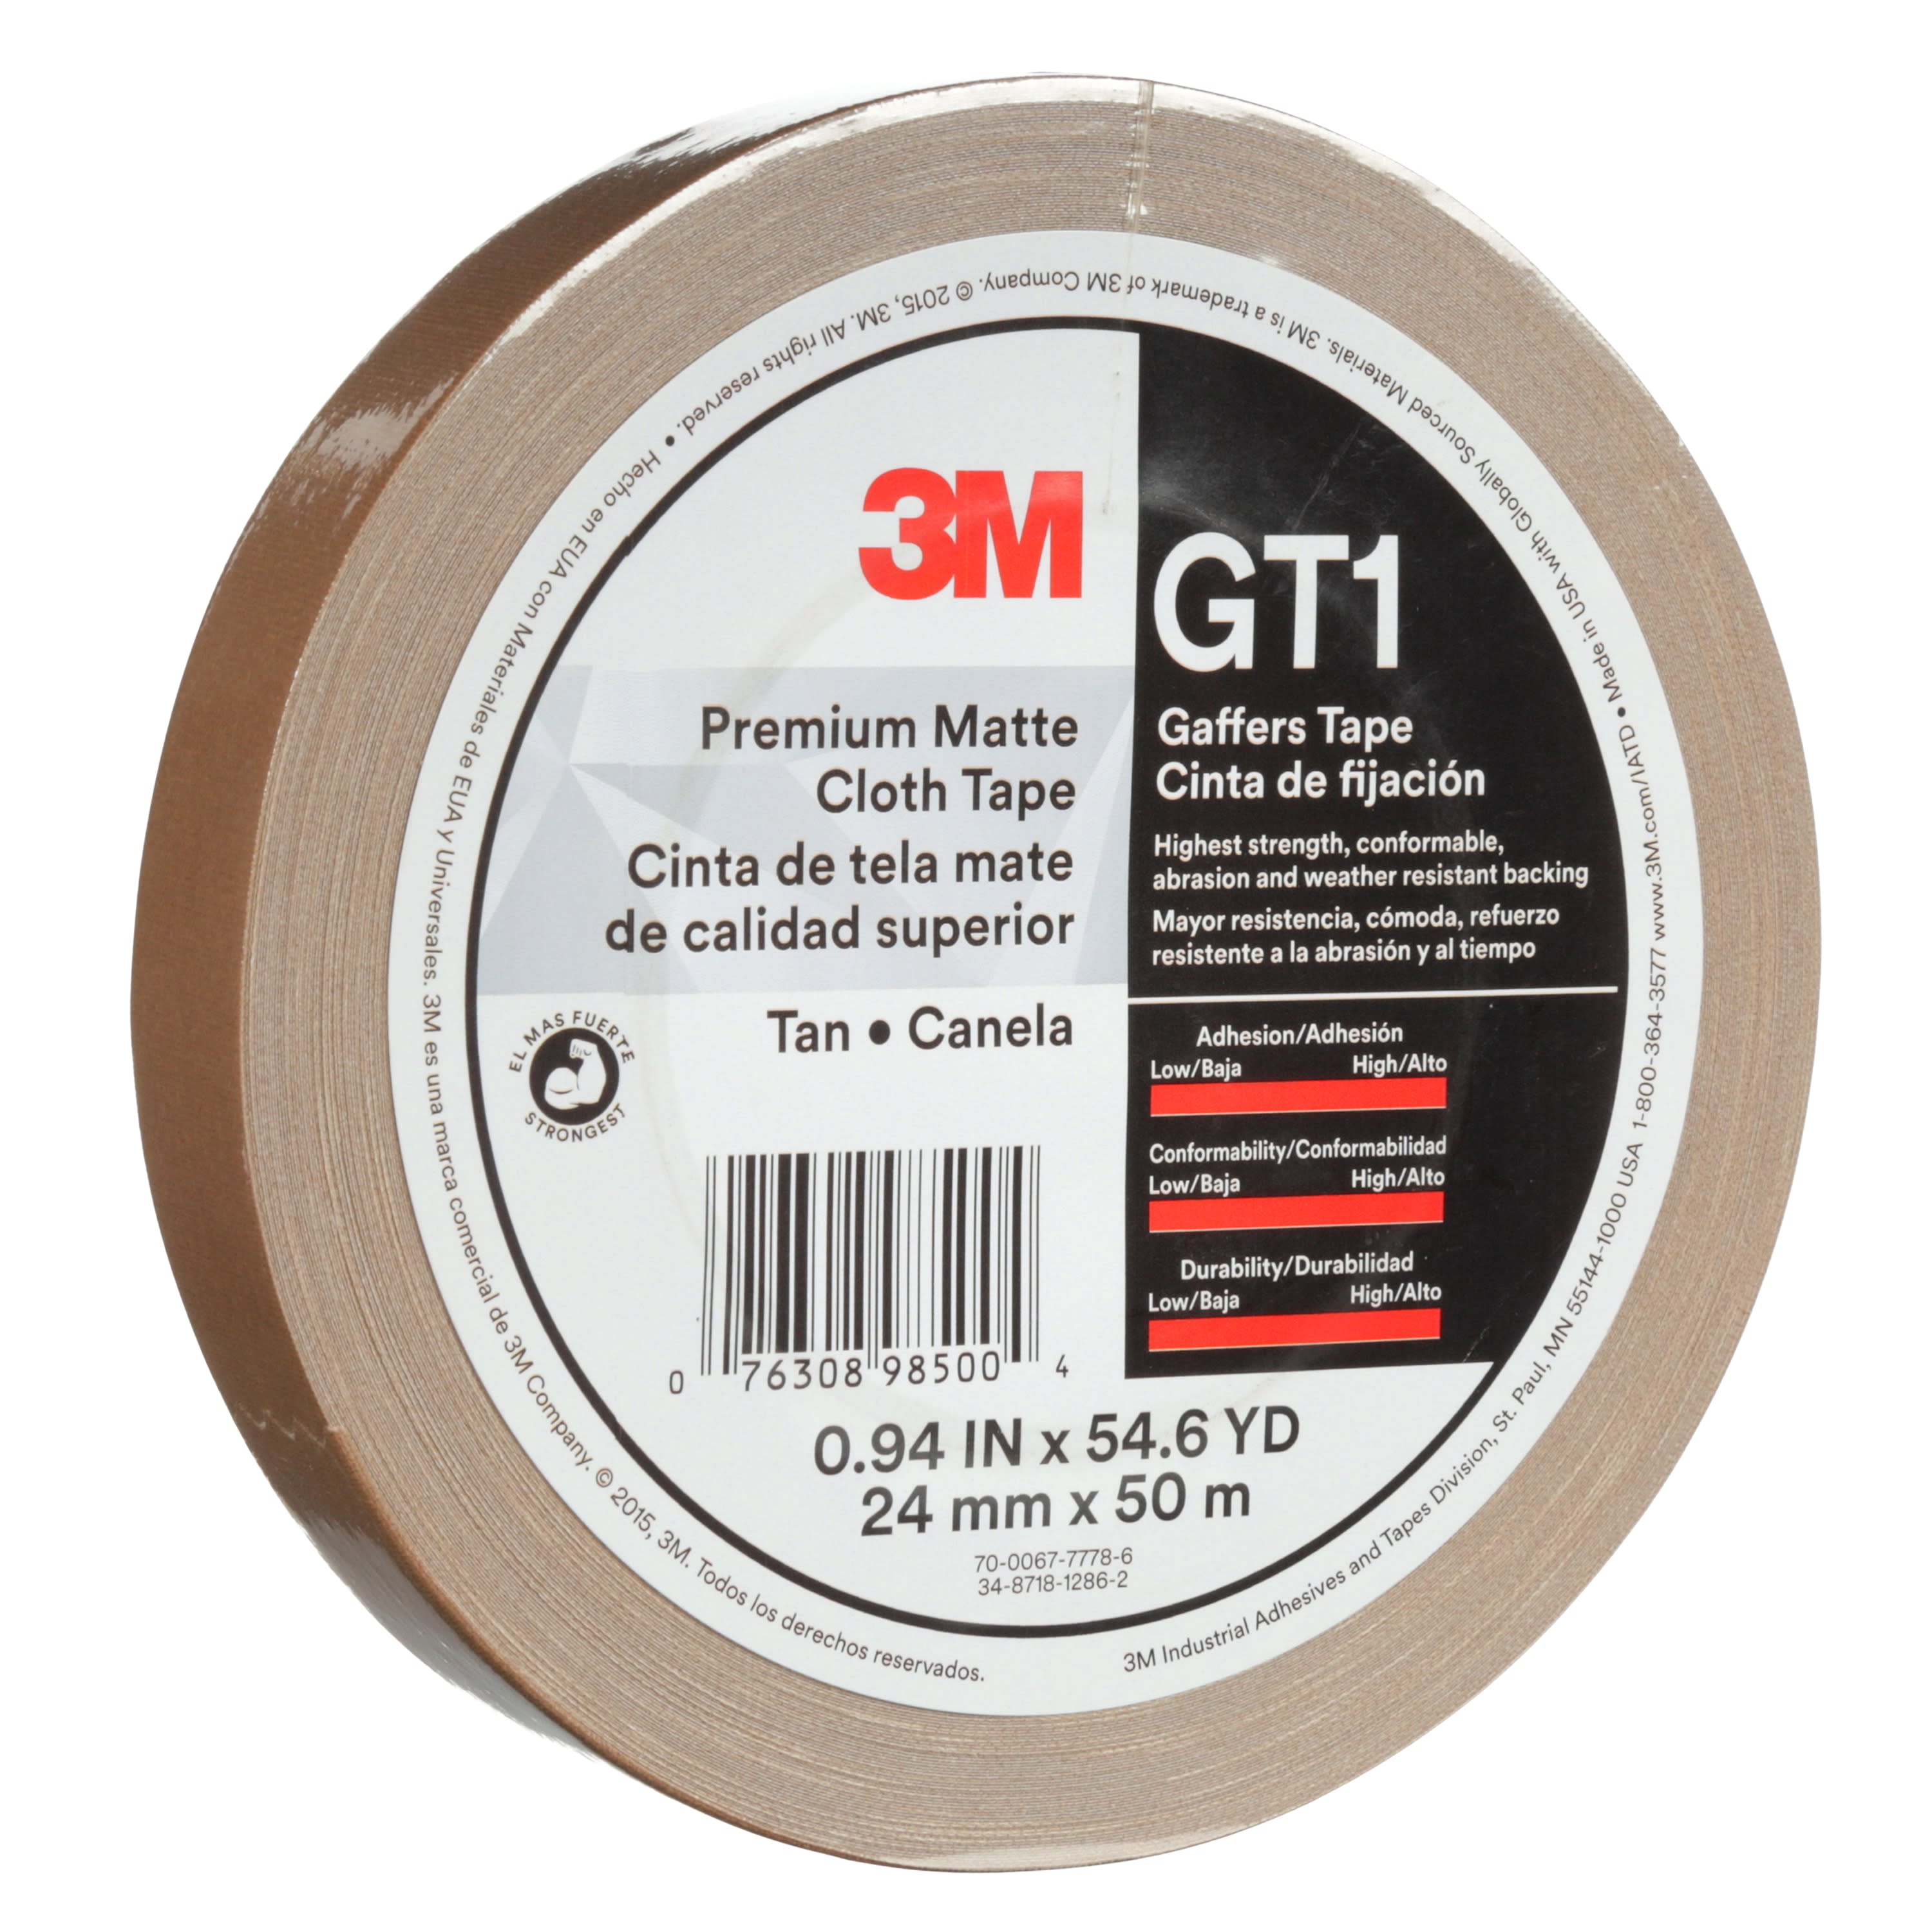 3M™ Premium Matte Cloth (Gaffers) Tape GT1, Tan, 24 mm x 50 m, 11 mil,
48 per case